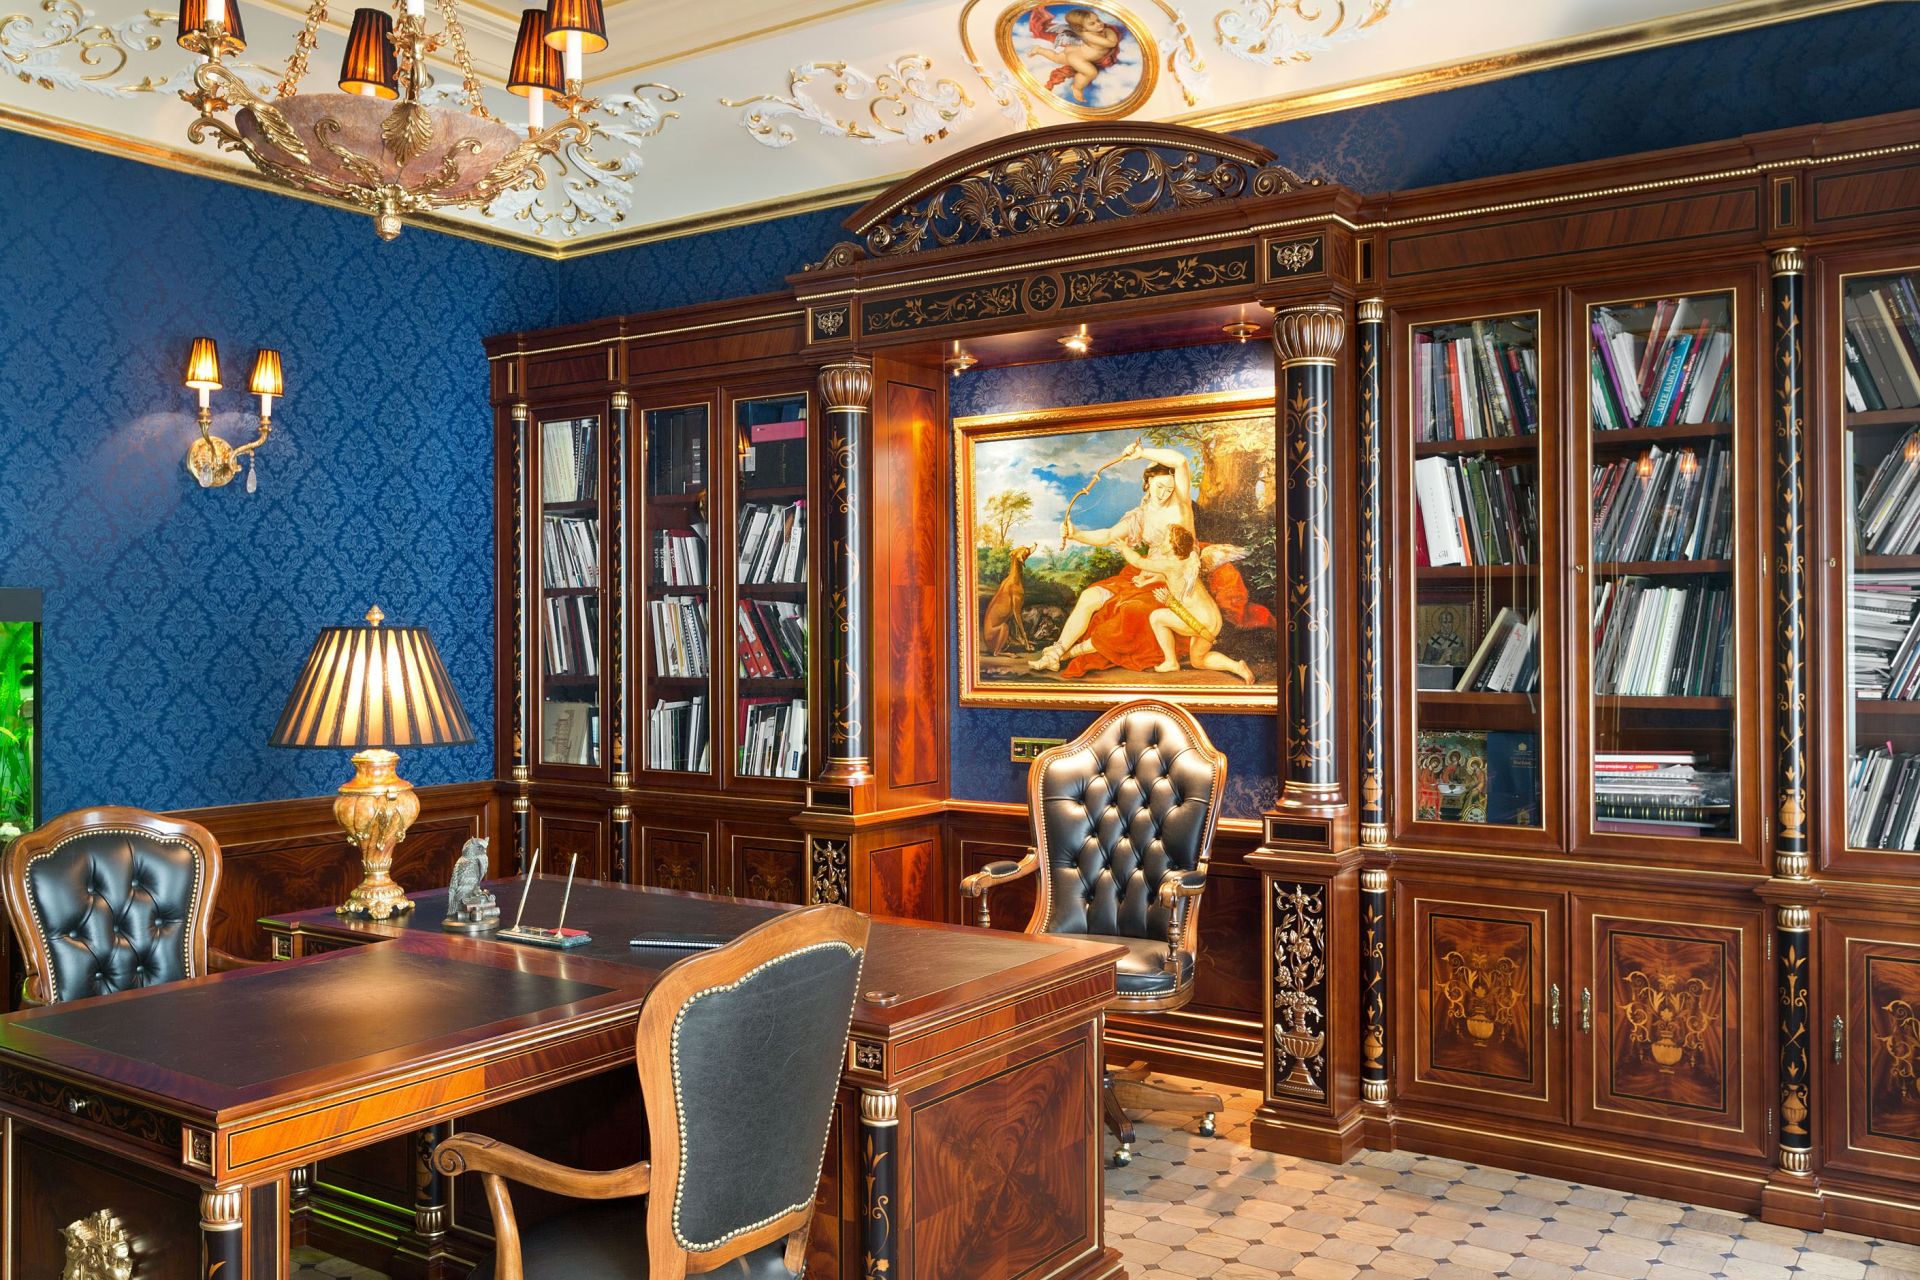 Study interior with baroque elements